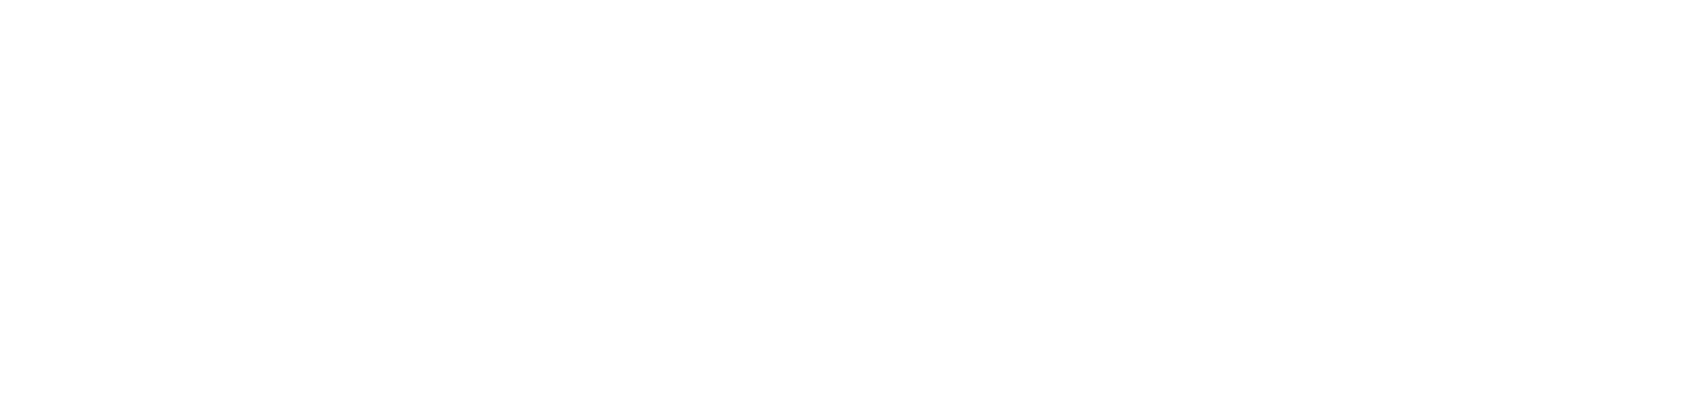 Global Tourism Plastics Initiative Transparent signatory 2